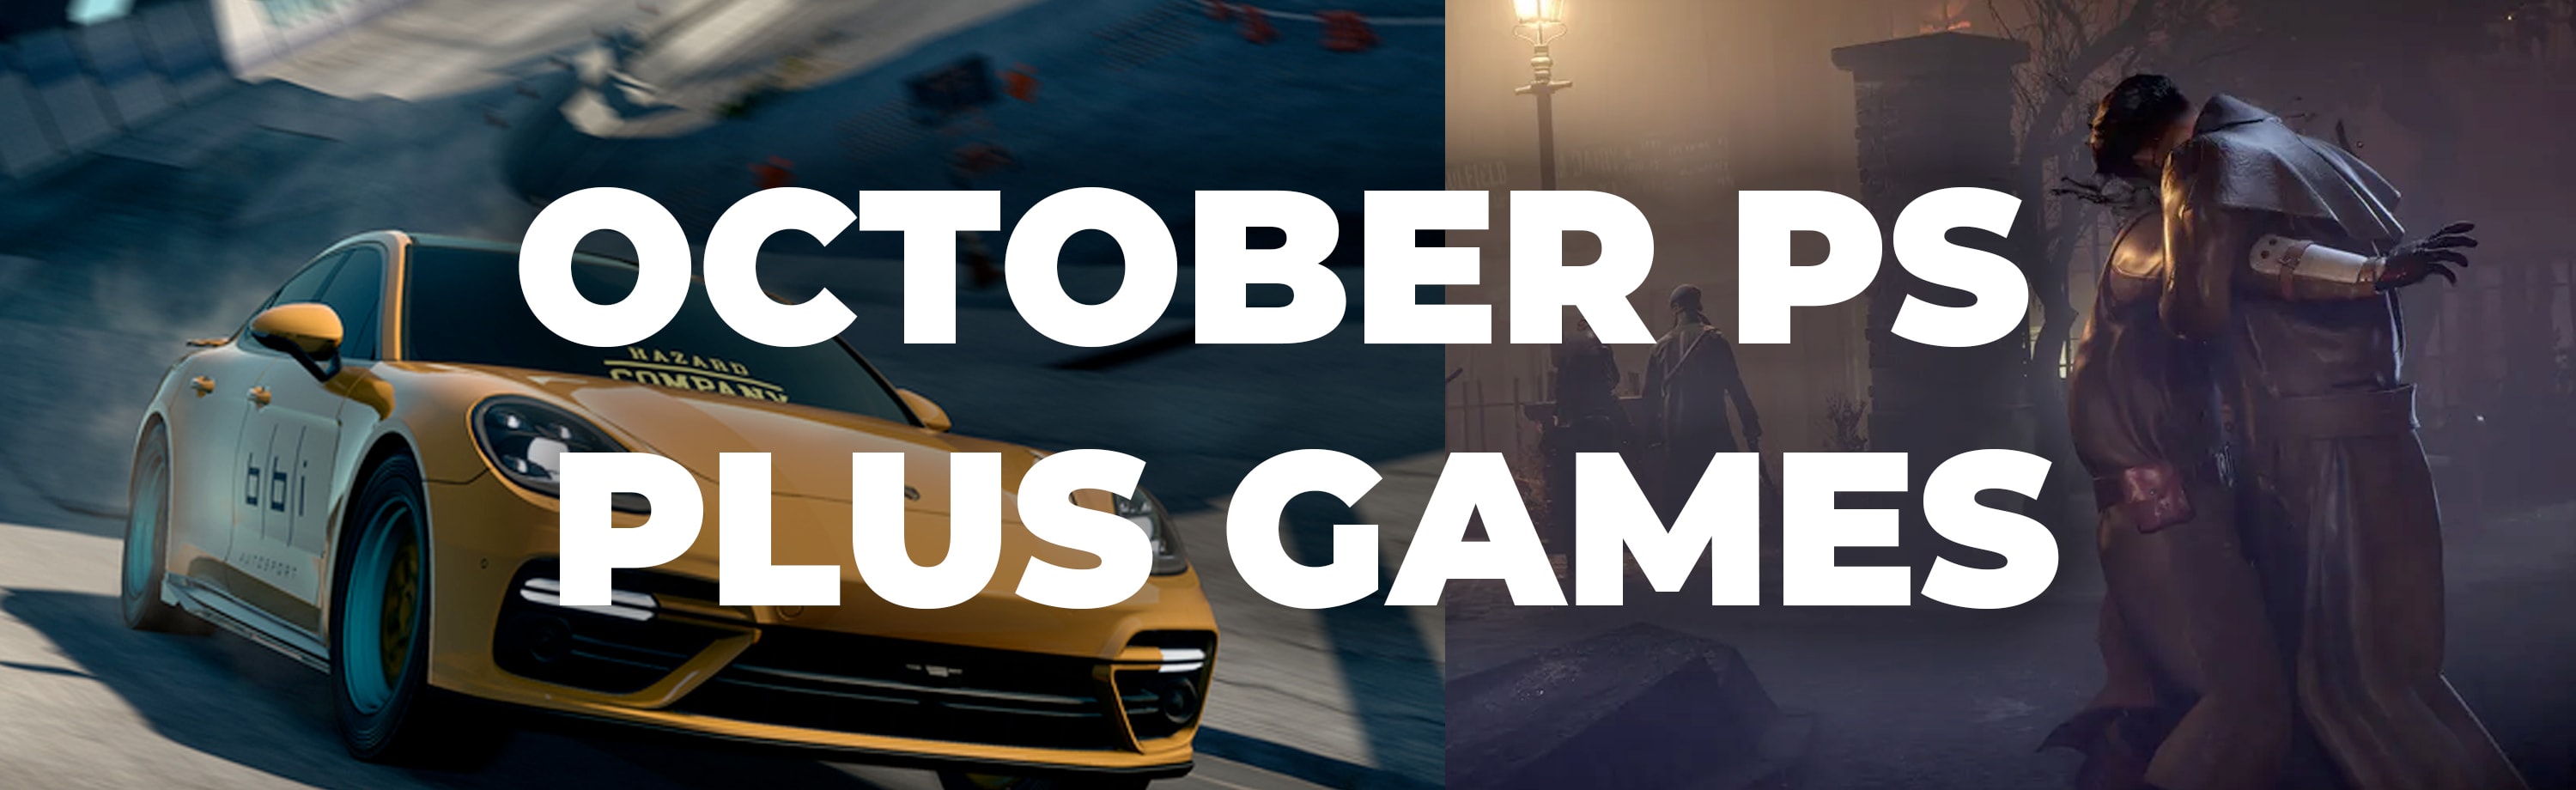 PS Plus October Games